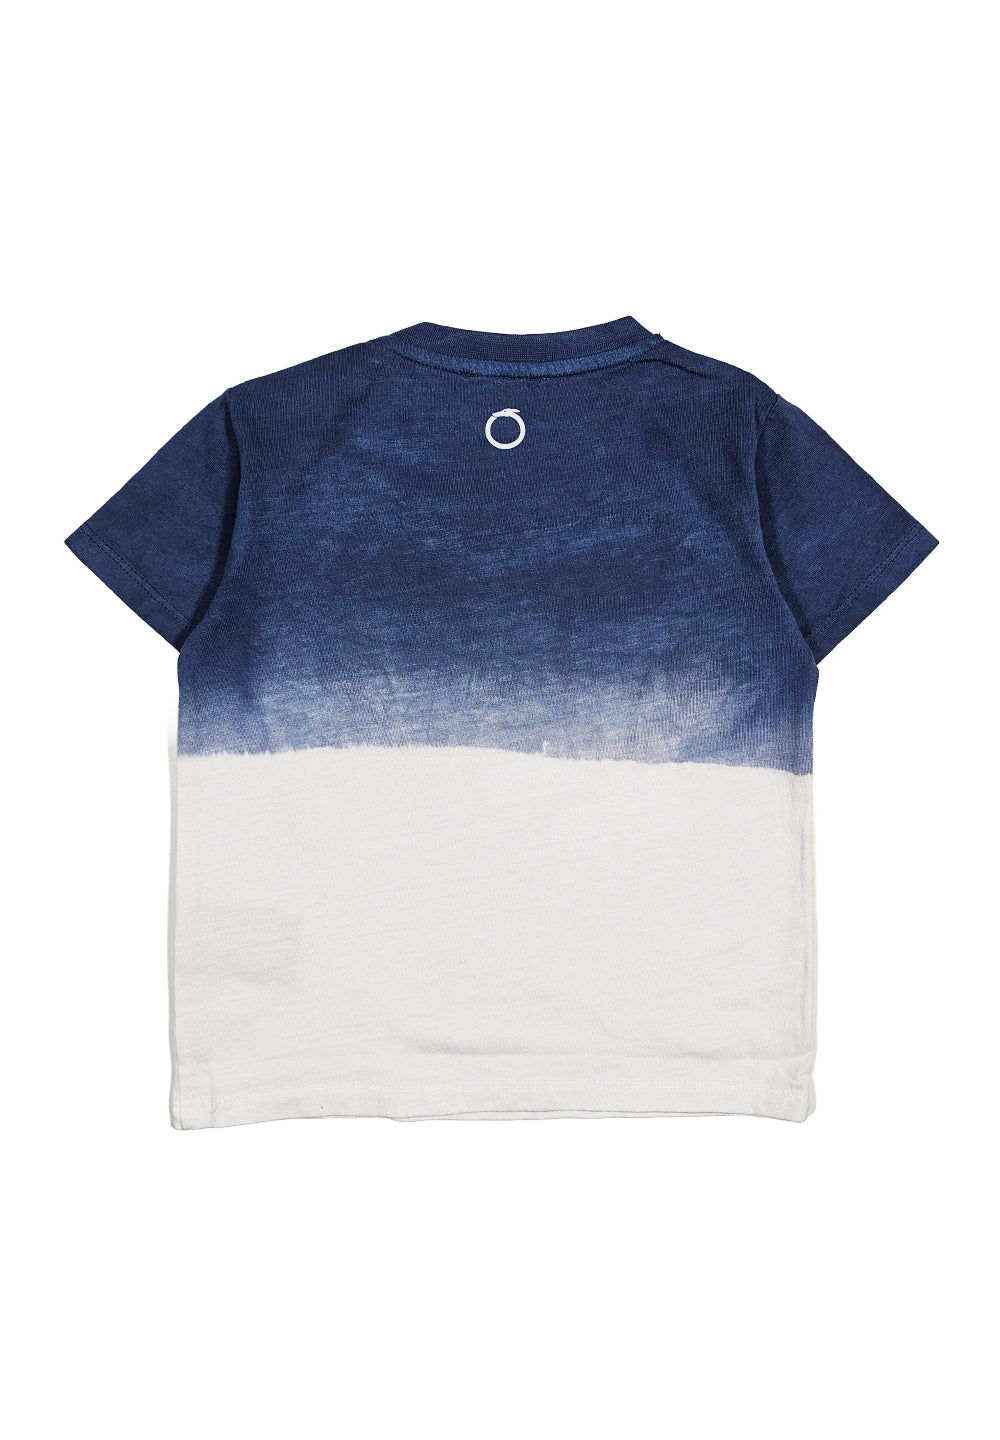 T-shirt blu-bianco per bambino - Primamoda kids